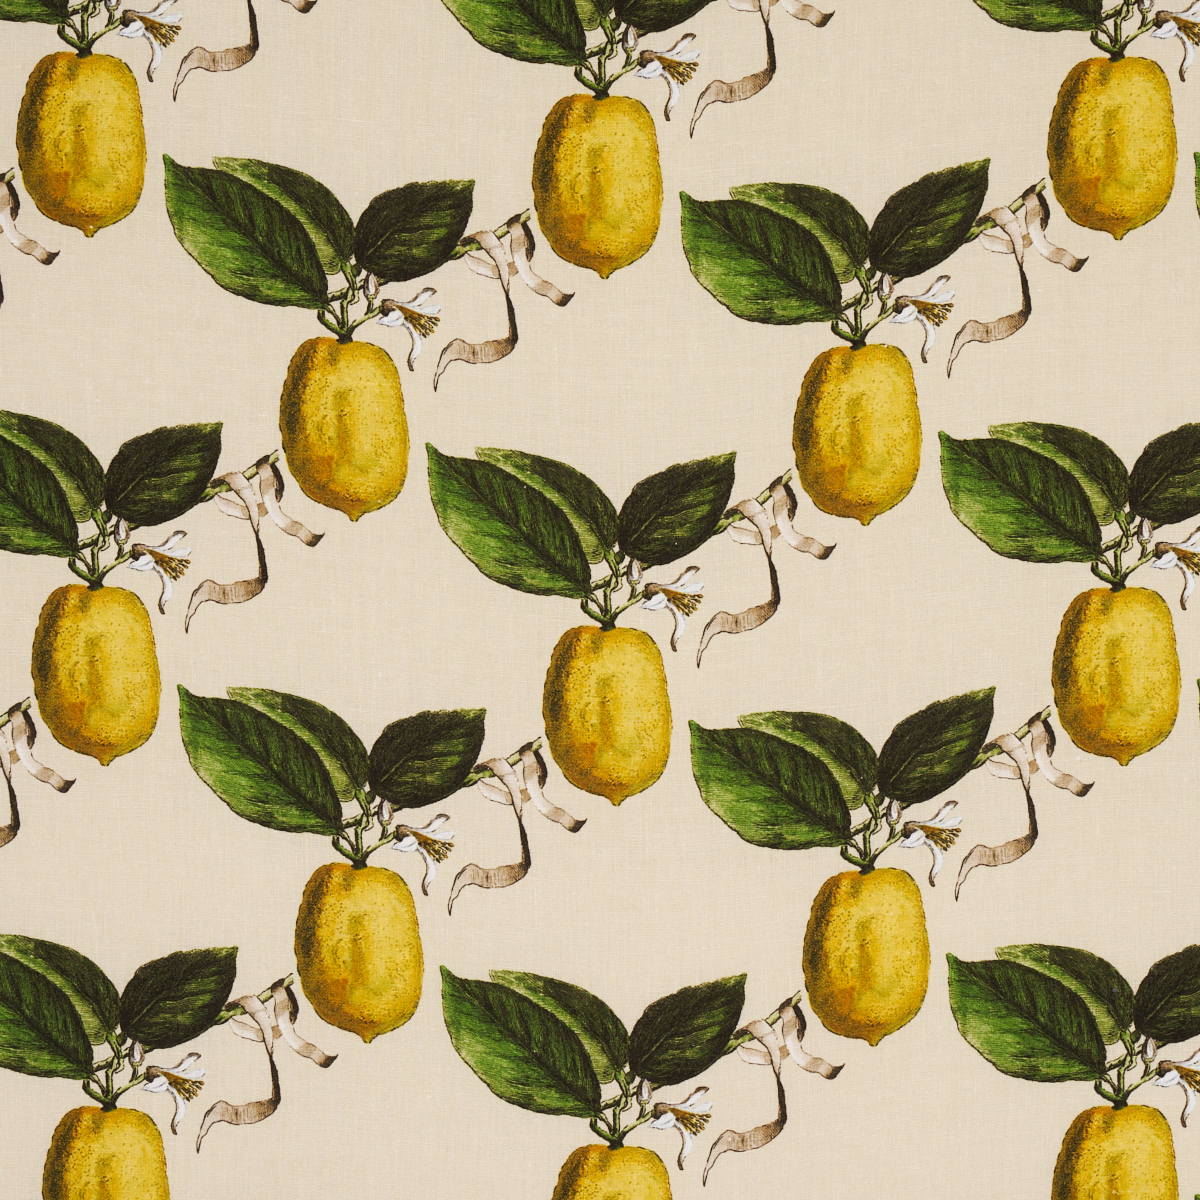 Le Citron Natural by Johnson Hartig for Libertine